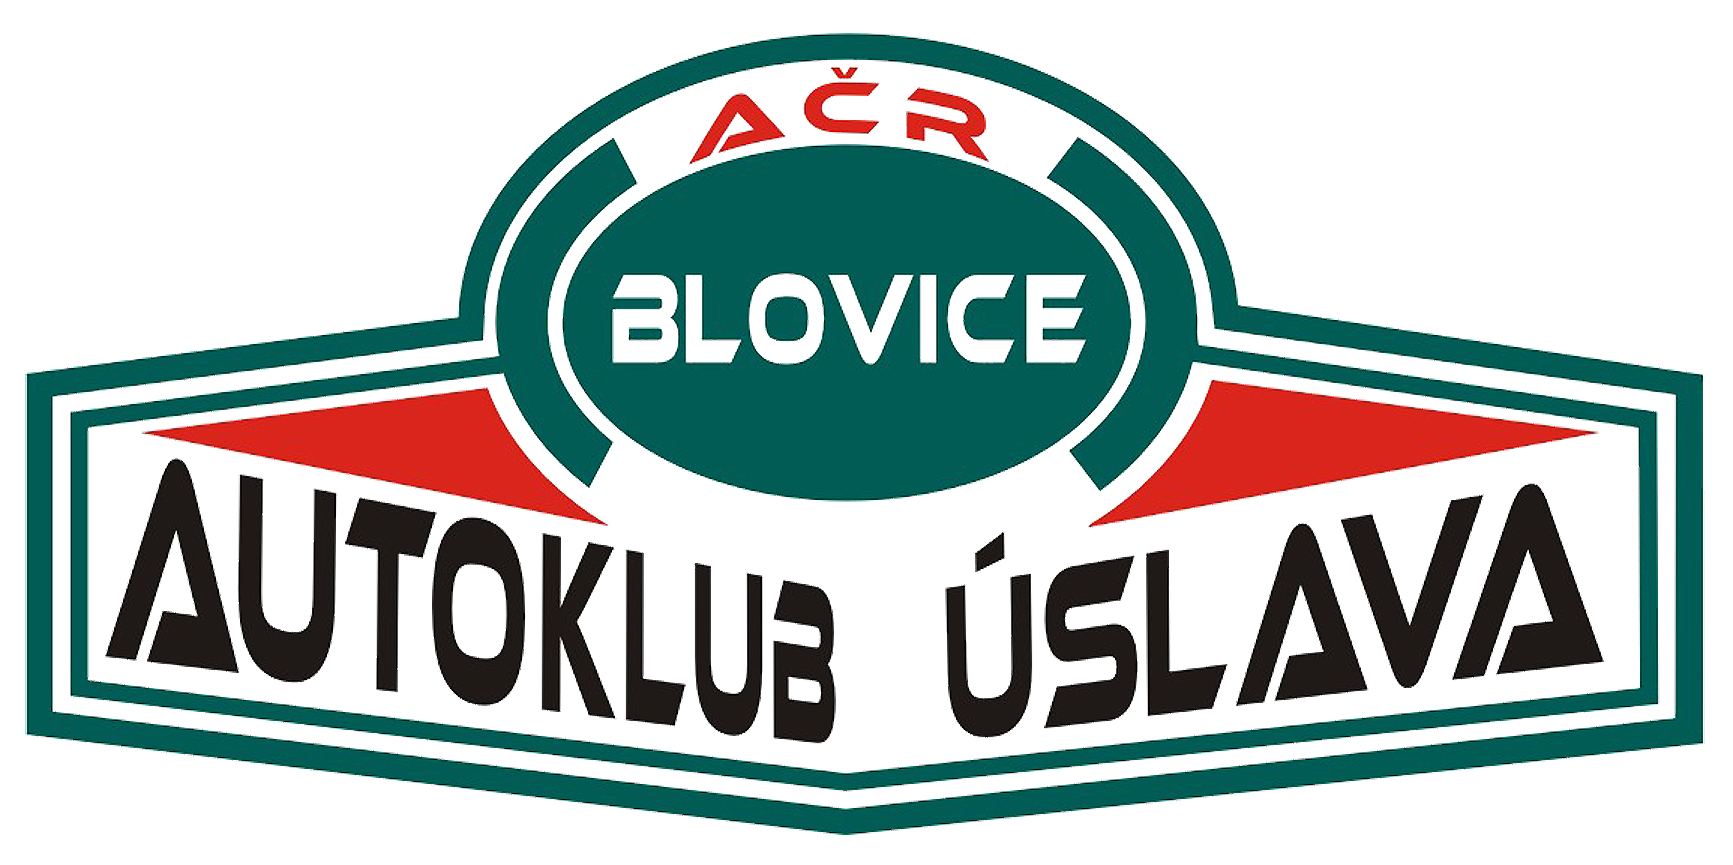 Autoklub Úslava Blovice